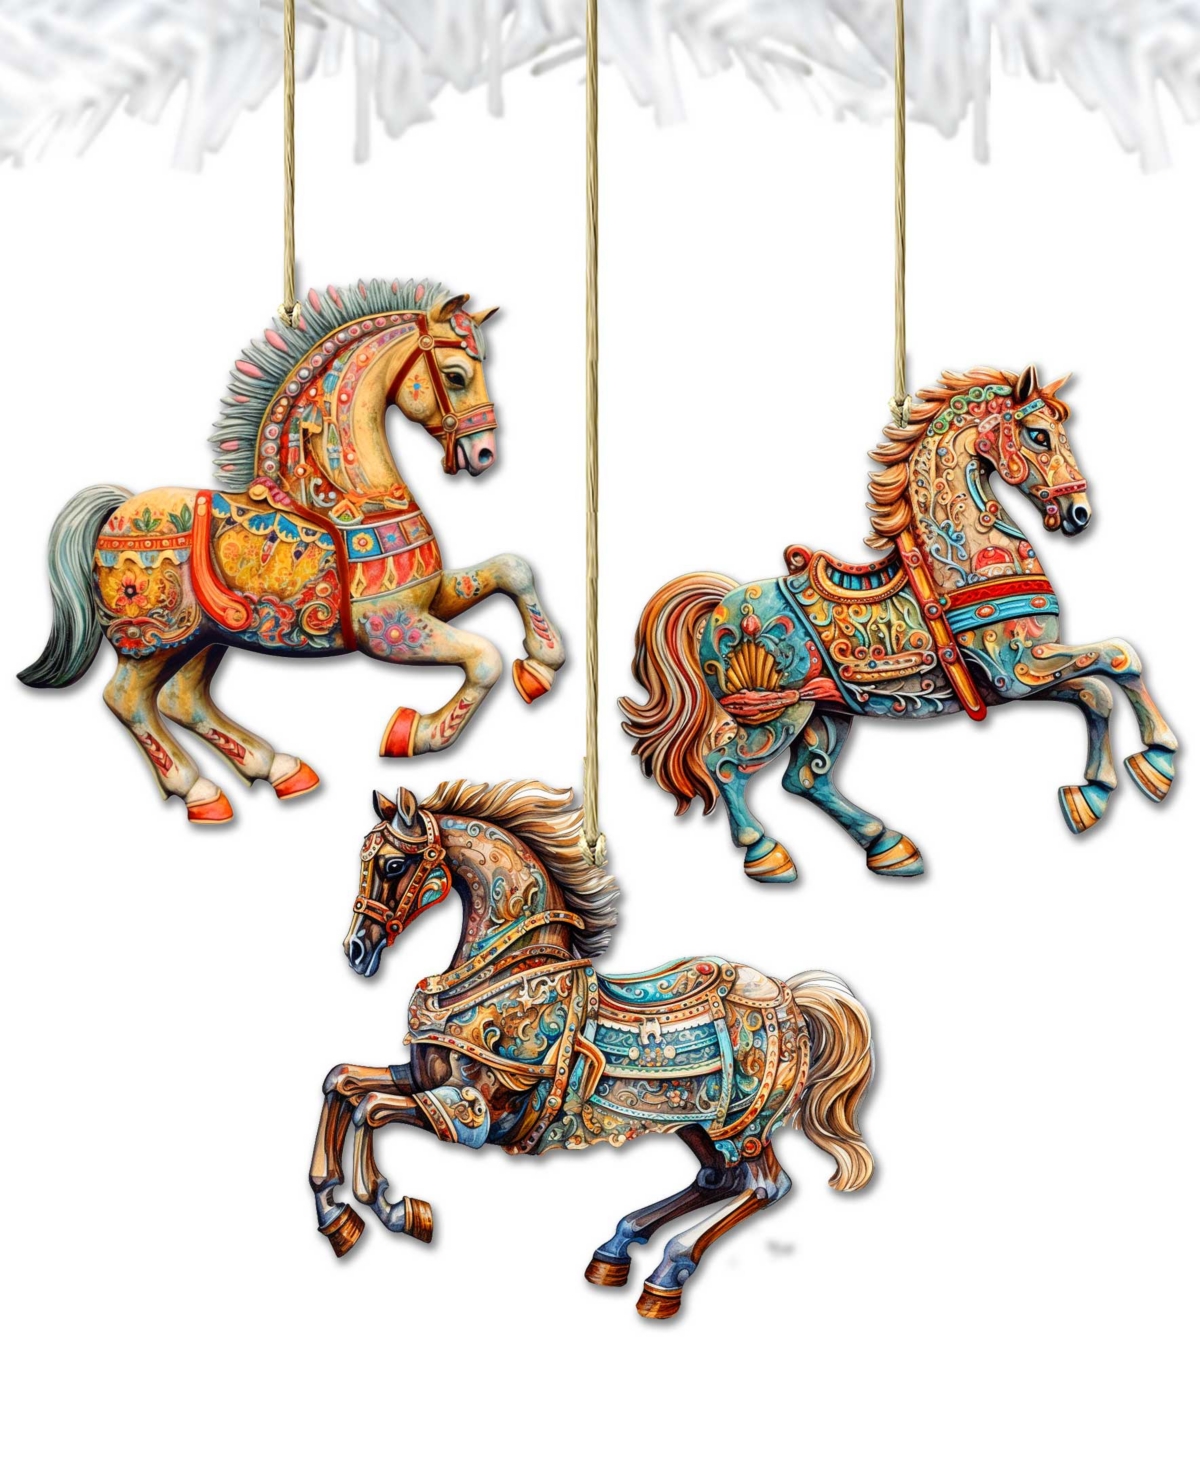 Designocracy Ornamental Horses Christmas Wooden Ornaments Holiday Decor Set Of 3 G. Debrekht In Multi Color